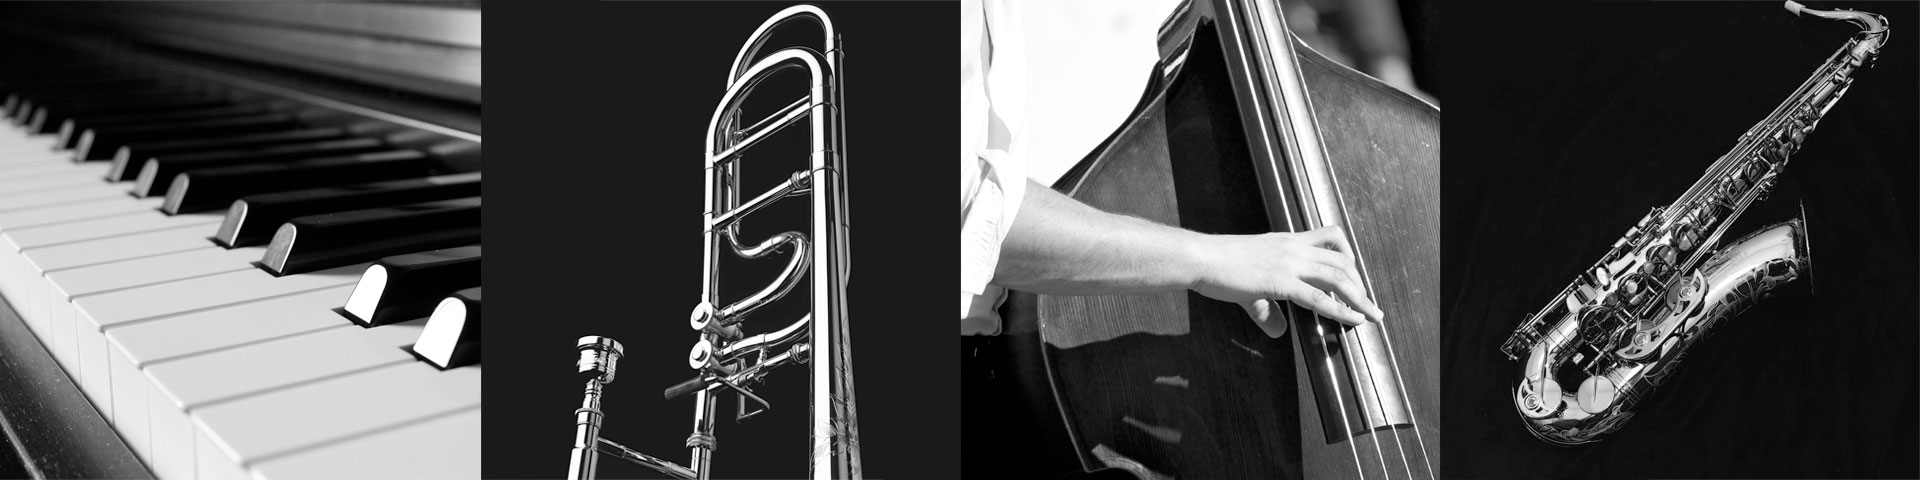 Collage of jazz instruments: piano, trombone, standup bass, and saxaphone